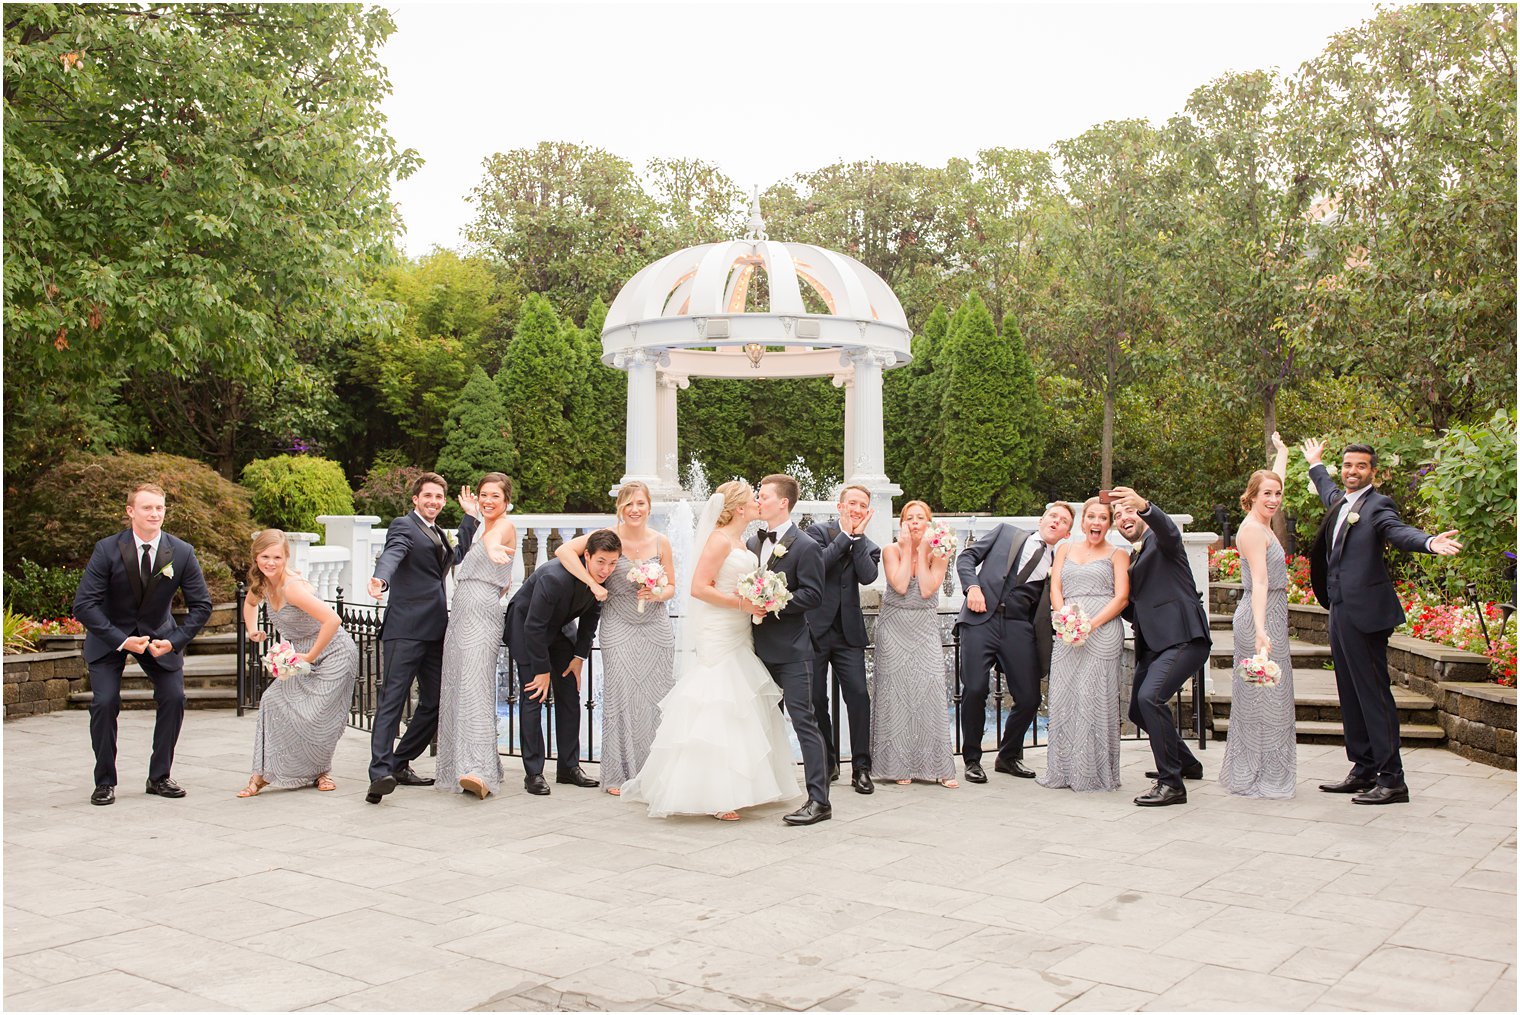 Fun bridal party photo by NJ Wedding Photographers